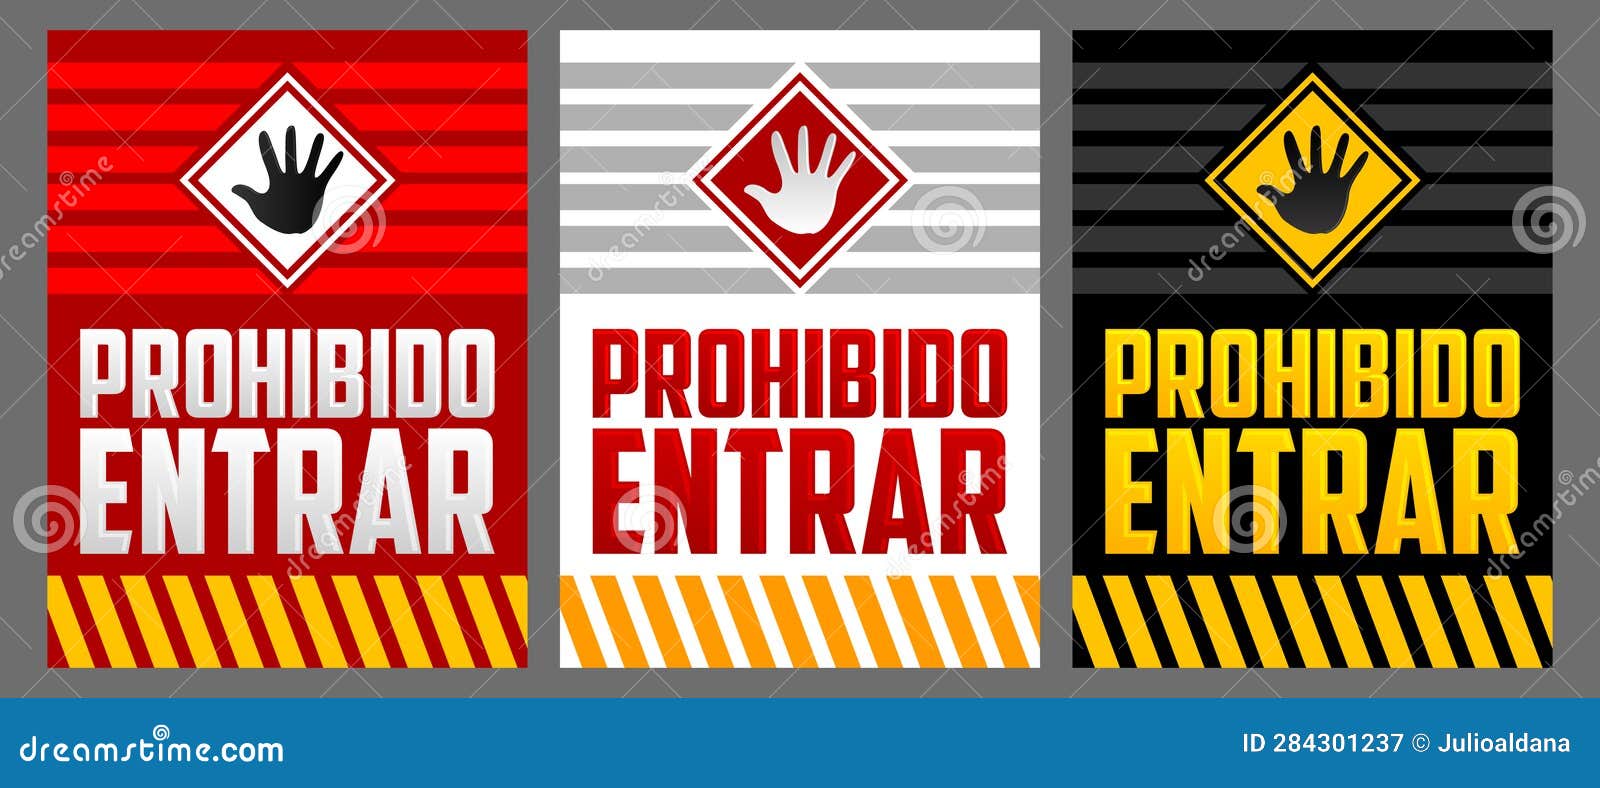 prohibido entrar, entrance prohibited, do not enter spanish text warning sign set